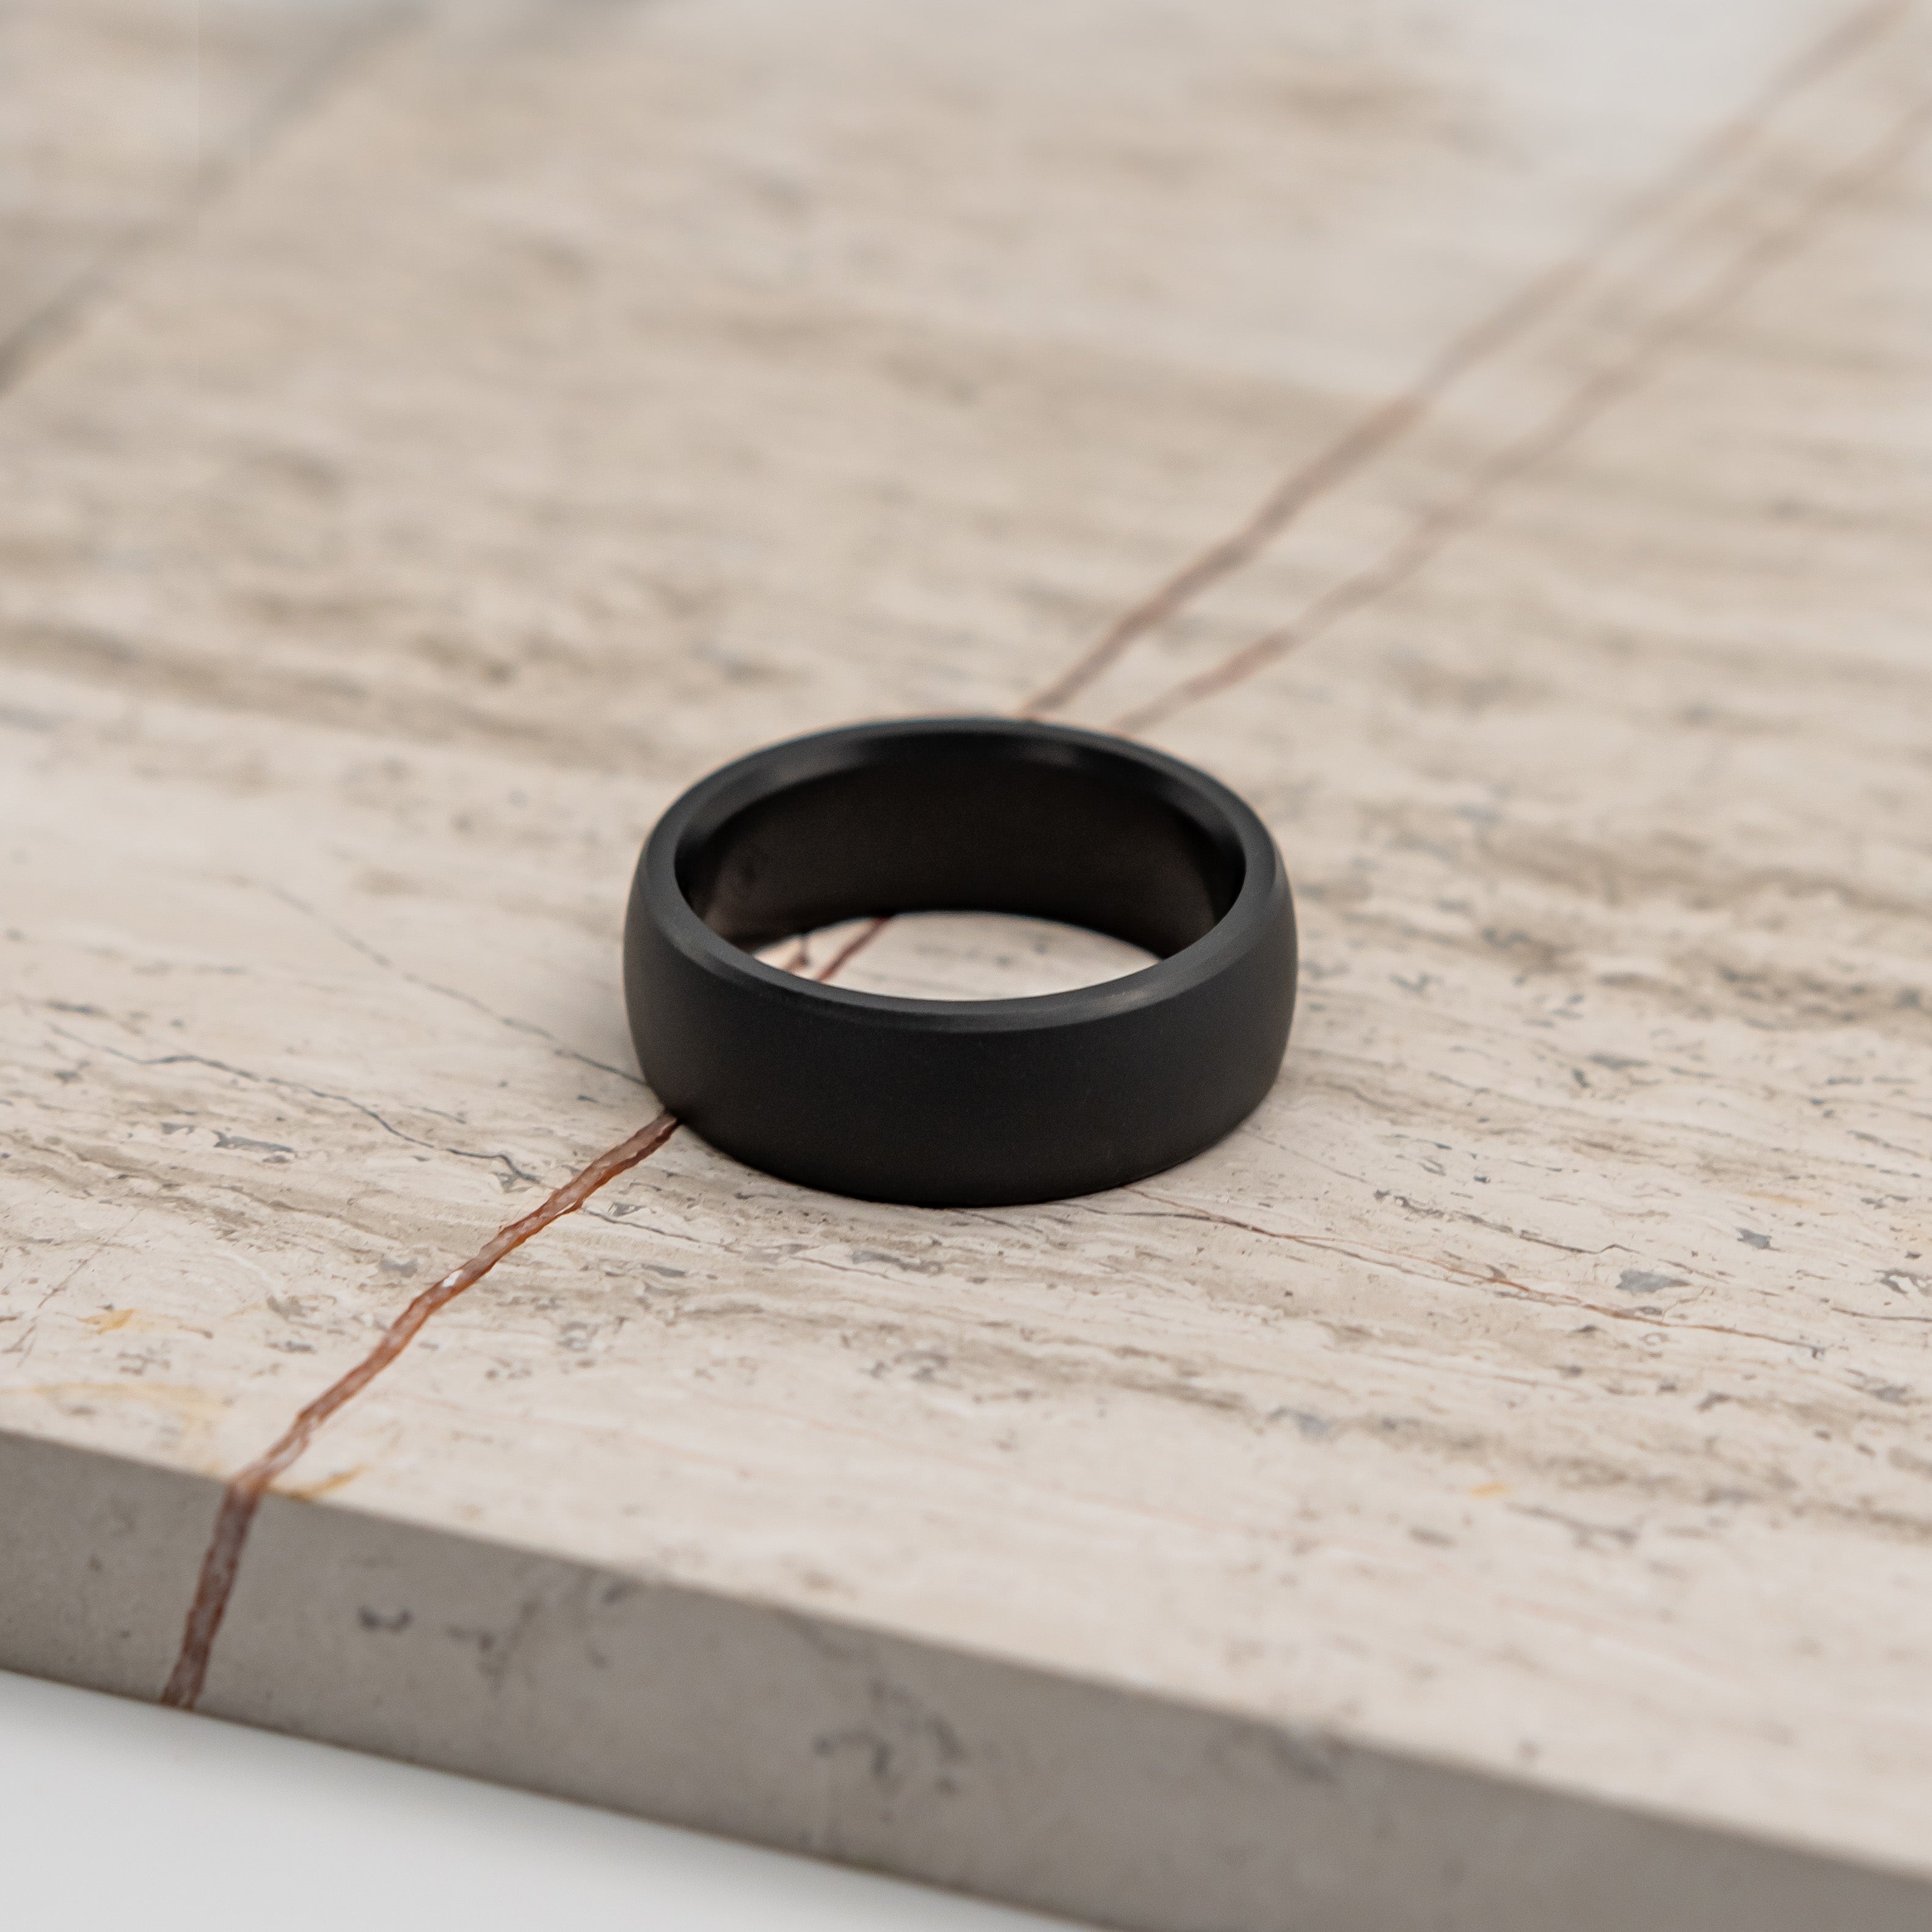 Buy Best Men's Ring in India Online from Mesmerize - Ceramic Rings